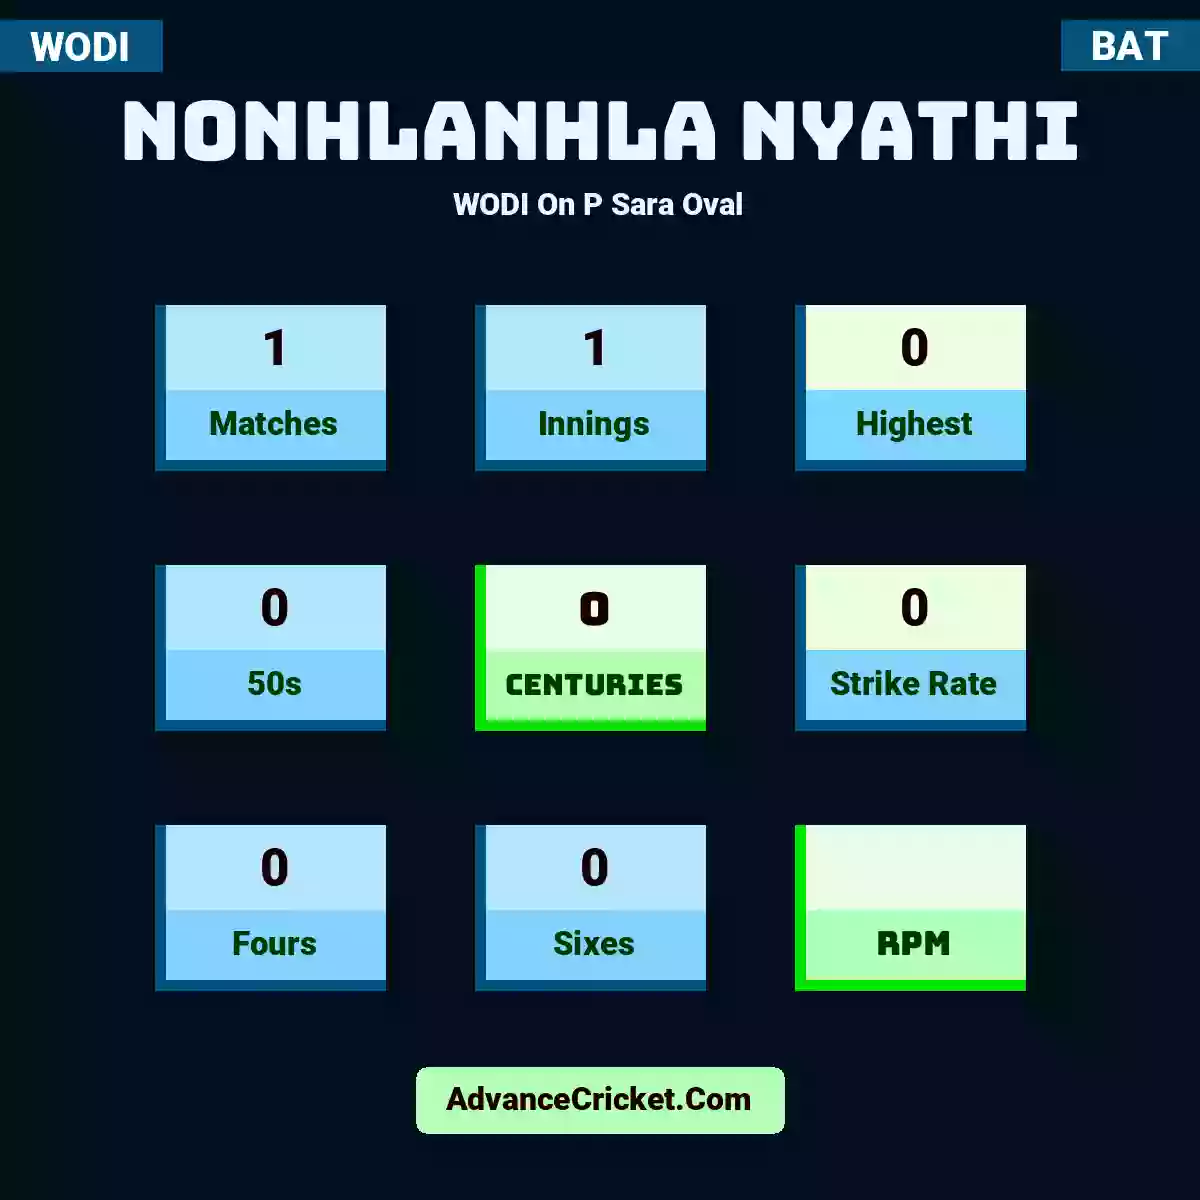 Nonhlanhla Nyathi WODI  On P Sara Oval, Nonhlanhla Nyathi played 1 matches, scored 0 runs as highest, 0 half-centuries, and 0 centuries, with a strike rate of 0. N.Nyathi hit 0 fours and 0 sixes.